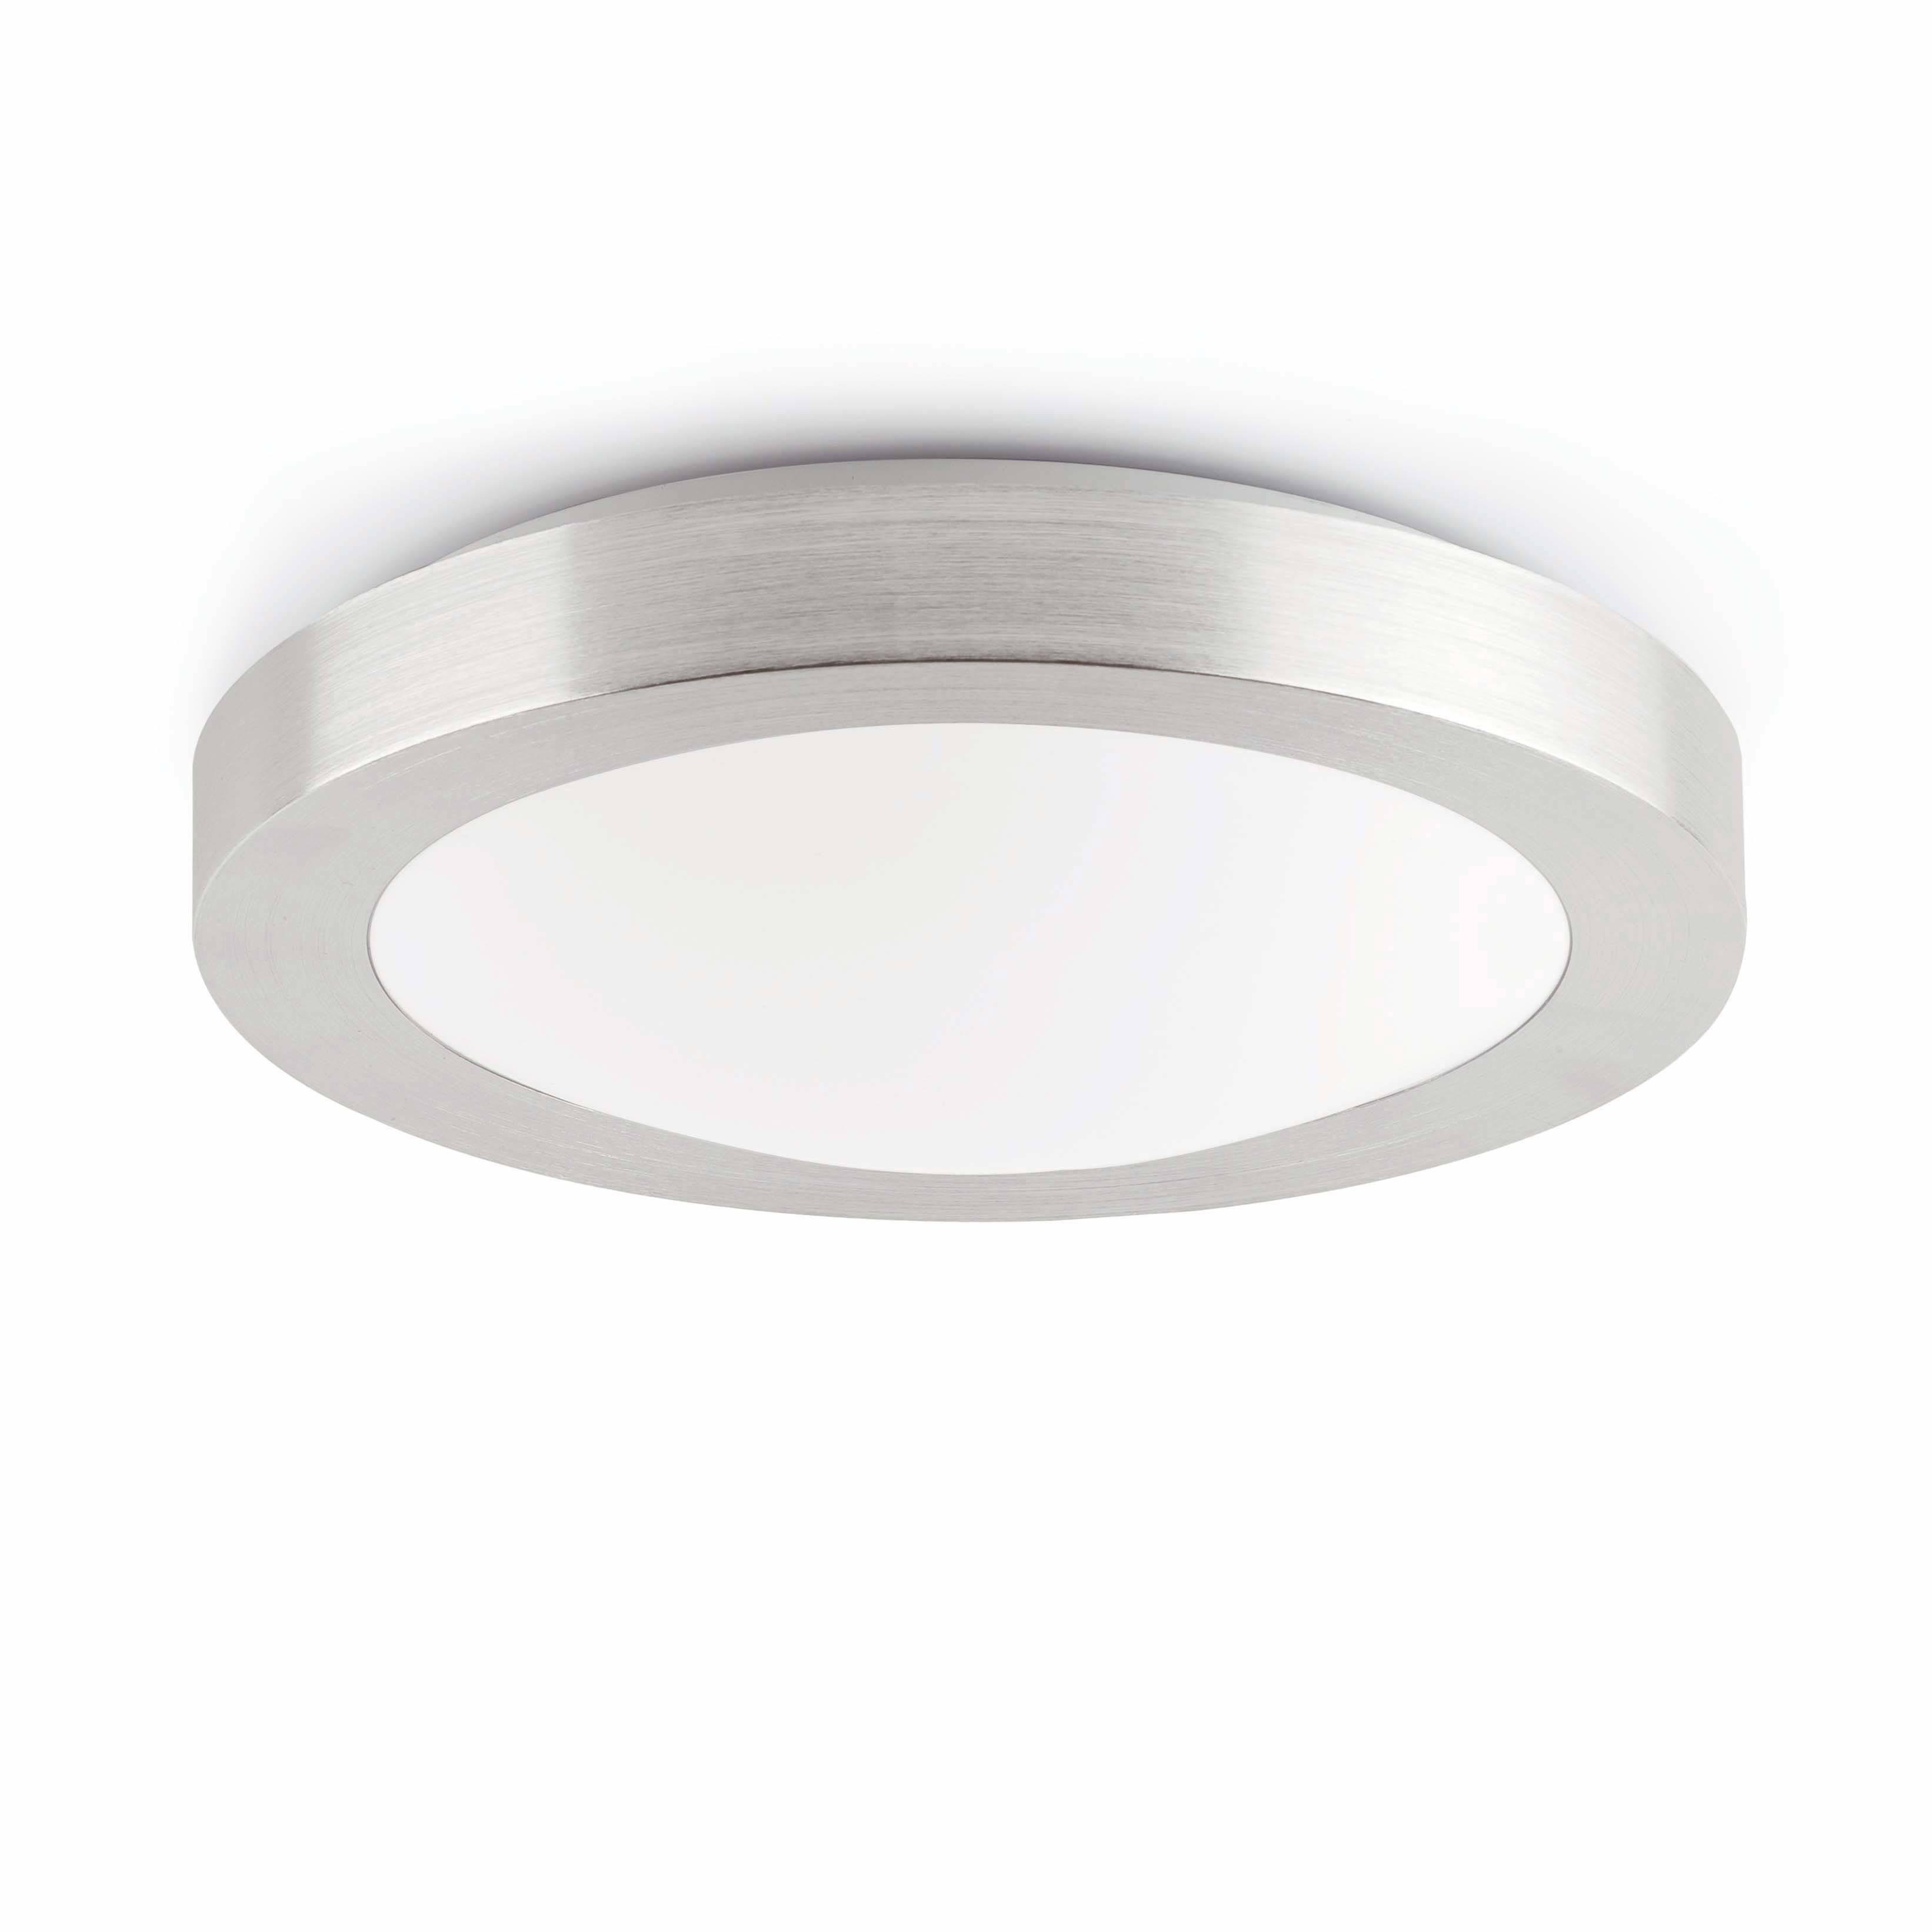 Logos 2 Light Medium Round Bathroom Flush Ceiling Light Aluminium White IP44 E27 - image 1